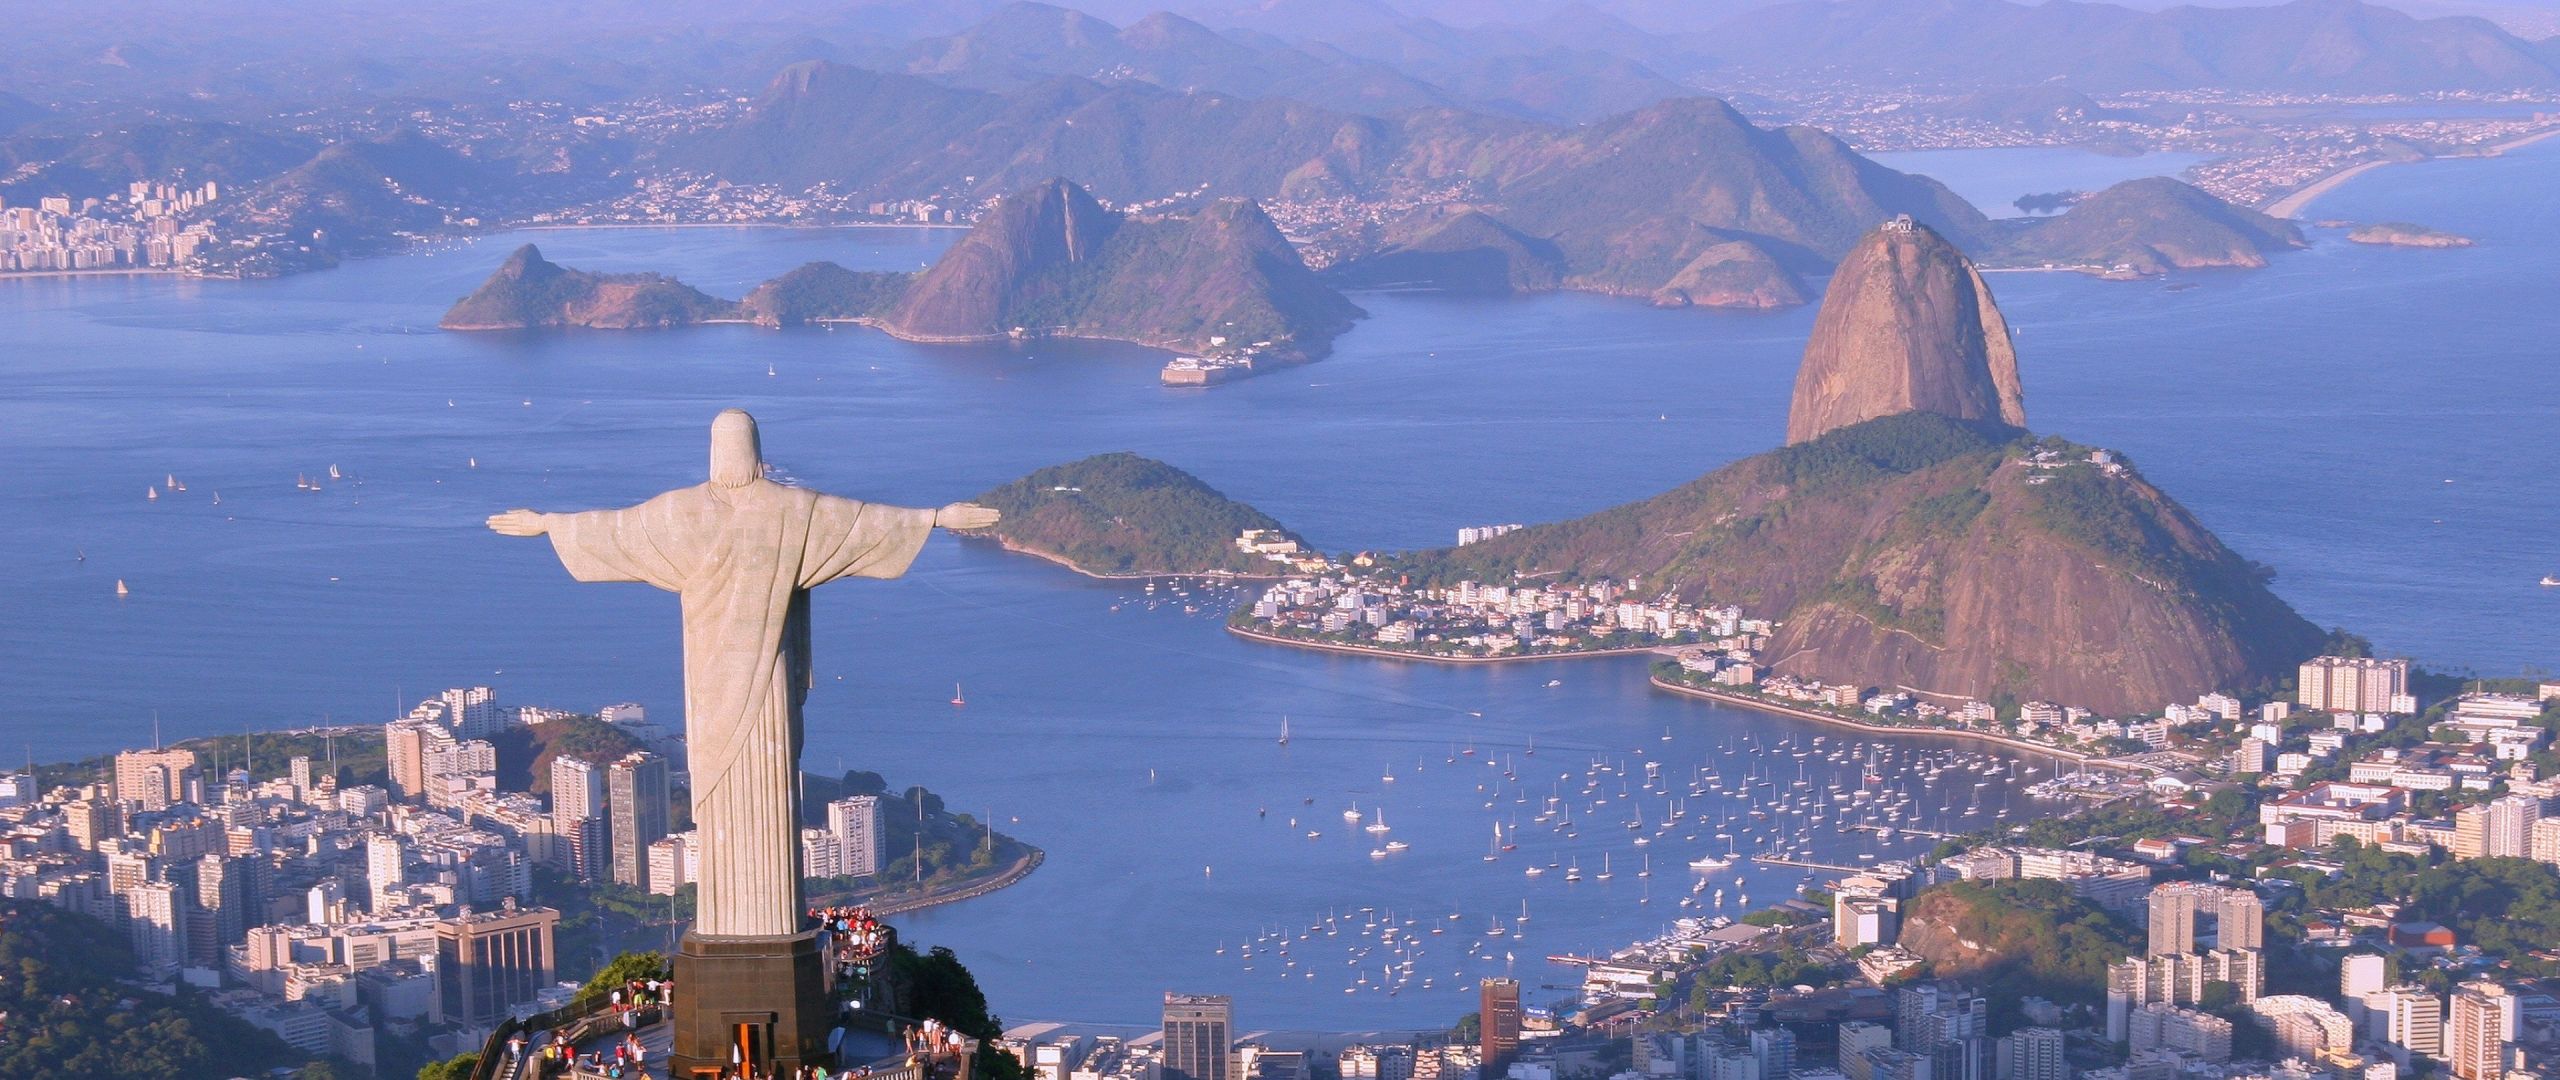 Download Christ the Redeemer, Rio de Janeiro, Brazil, Tourism